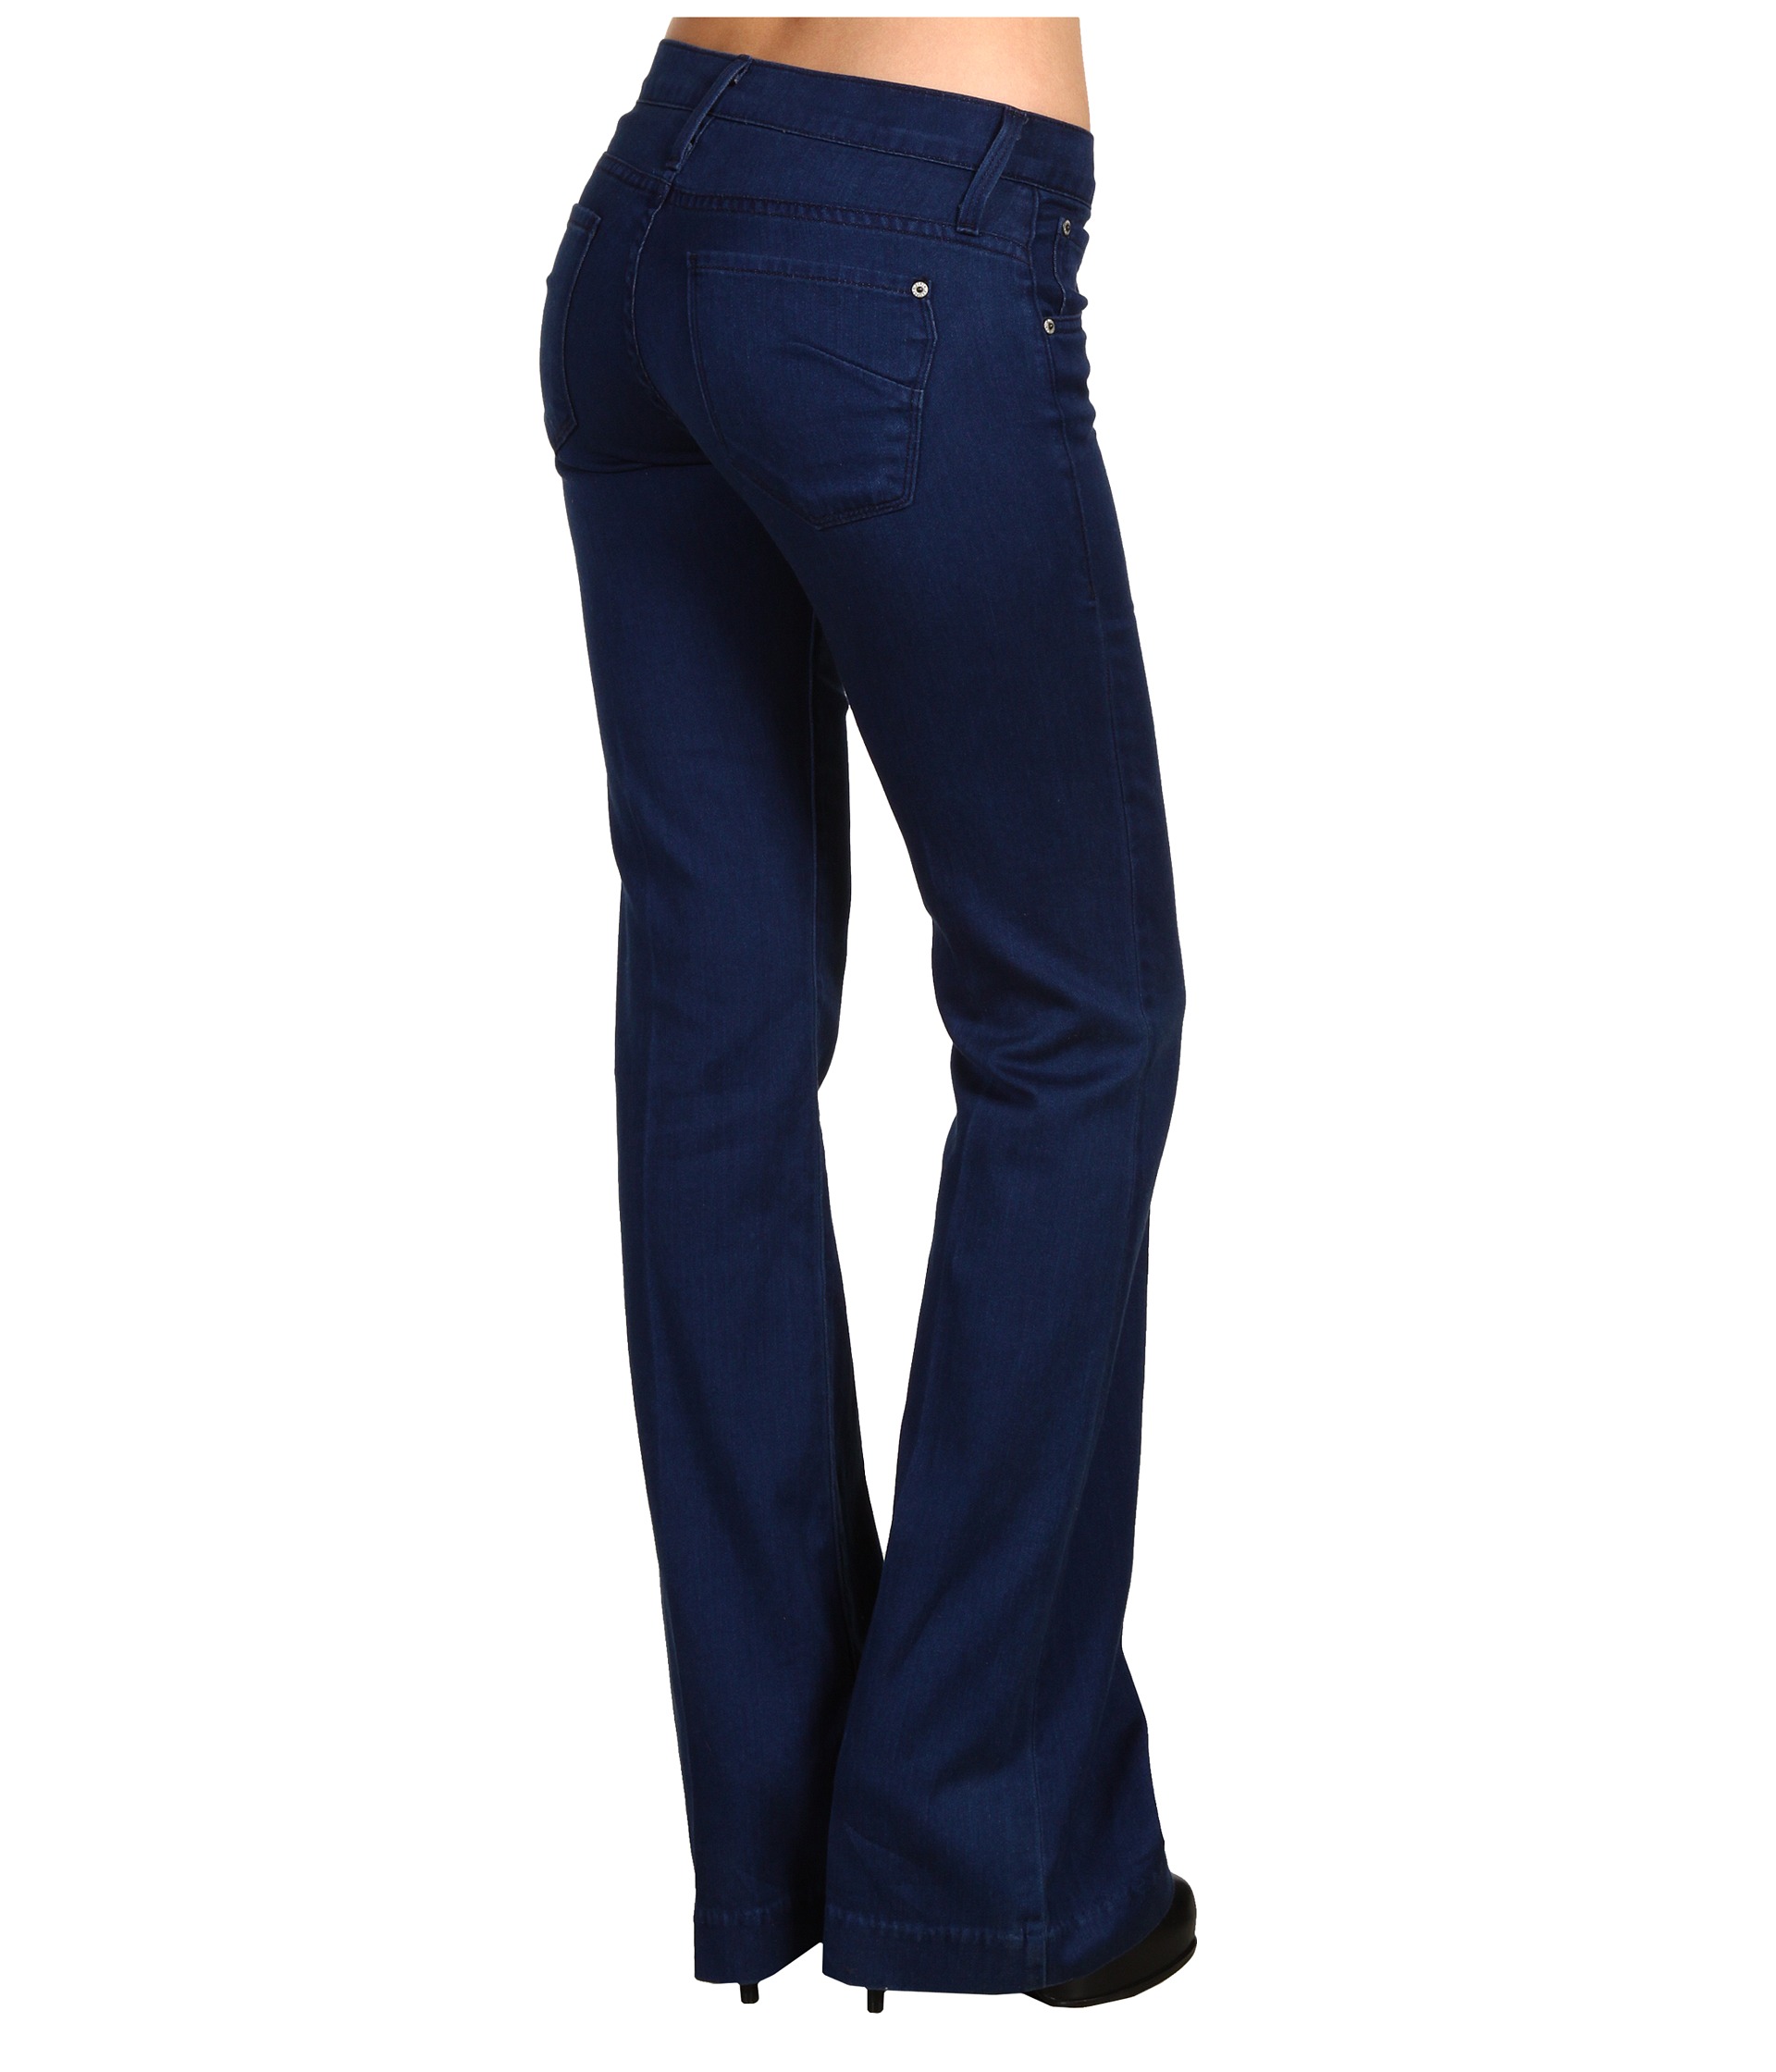 James Jeans Fly Boy Slim Leg Trouser in Mondrian $51.99 (  